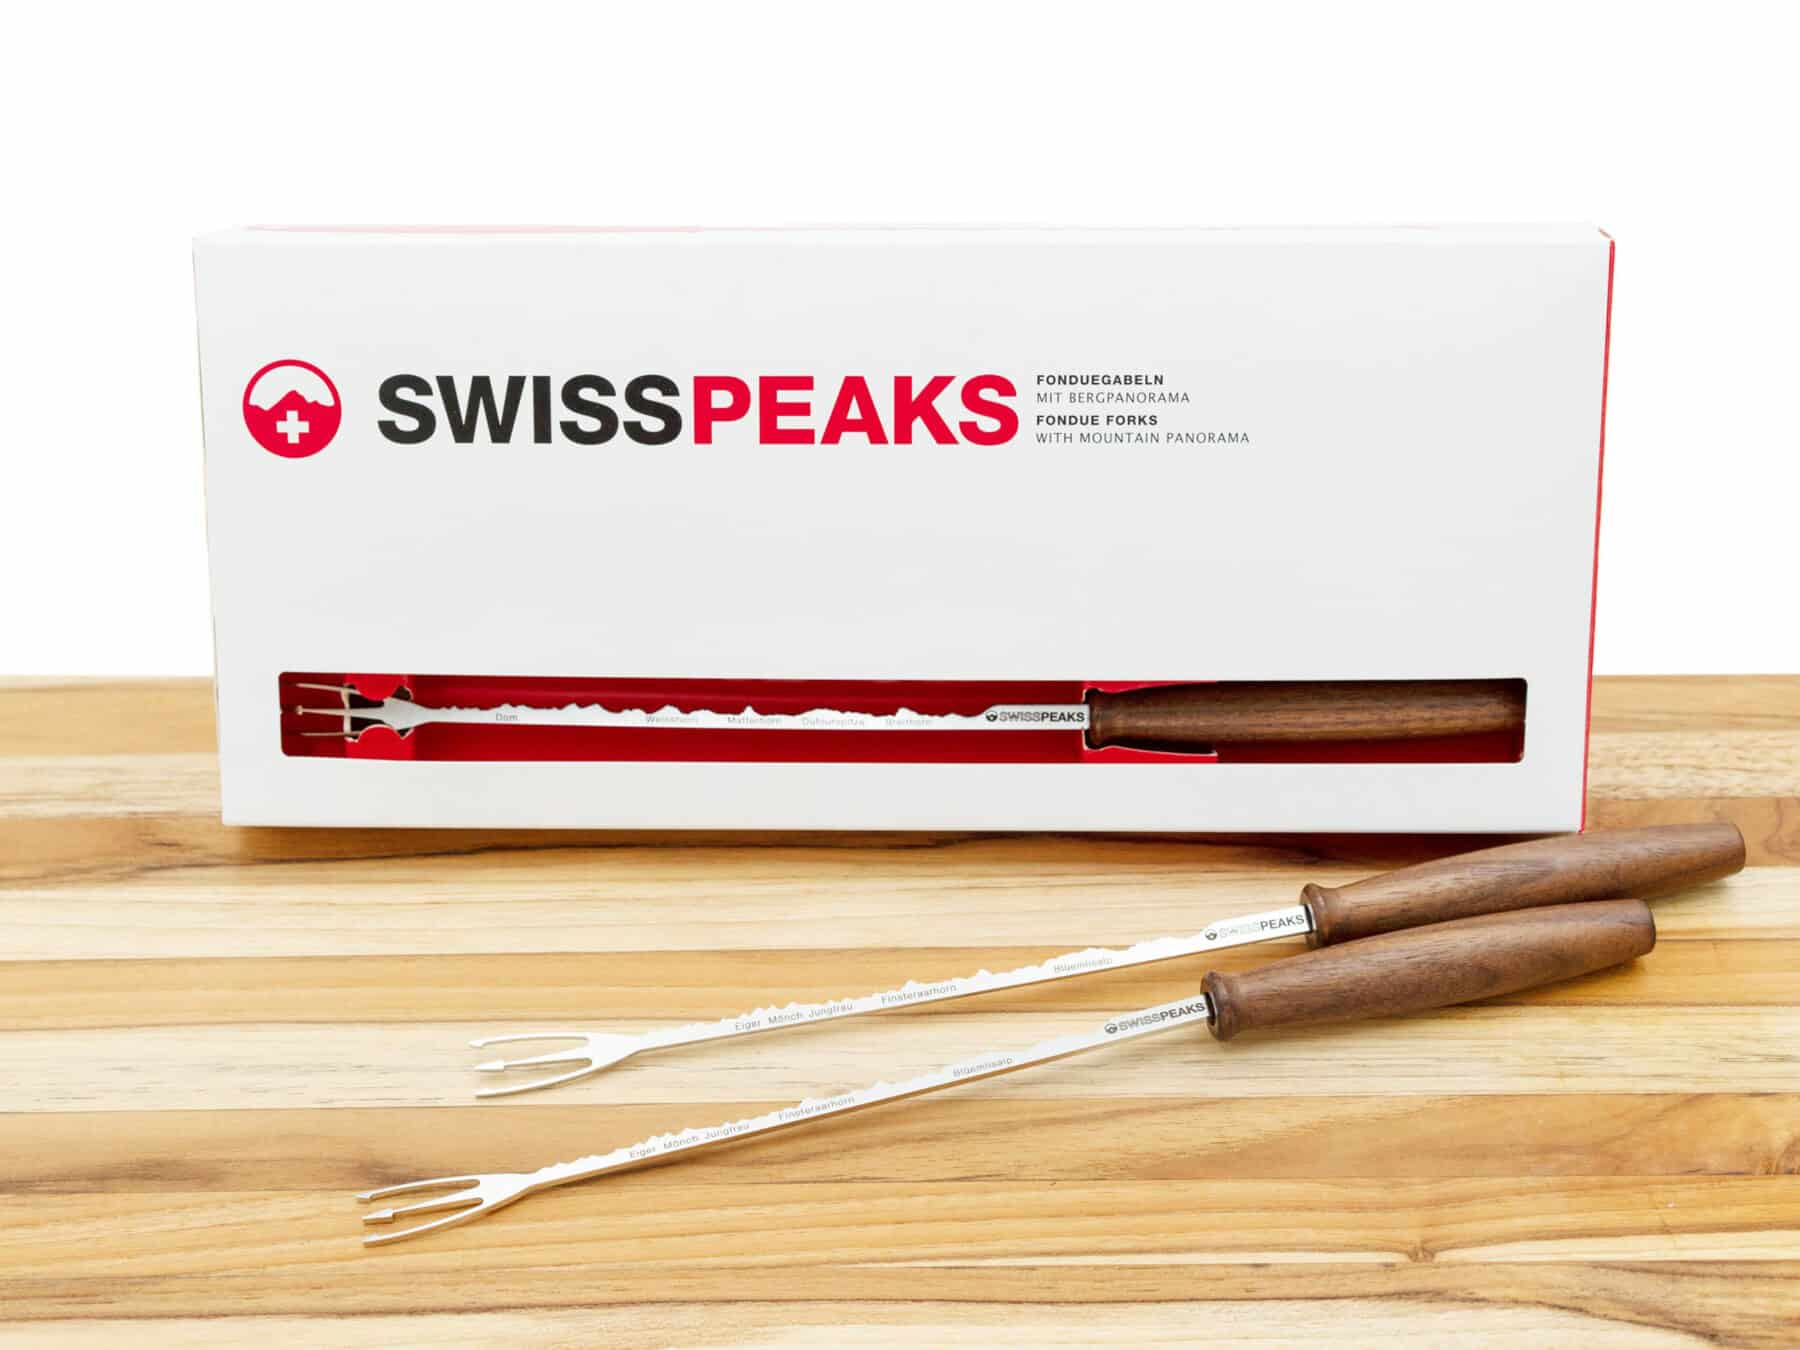 Fonduegabeln mit Schweizer Bergpanoramen Swiss Peaks swiss made Swiss Alps Edition